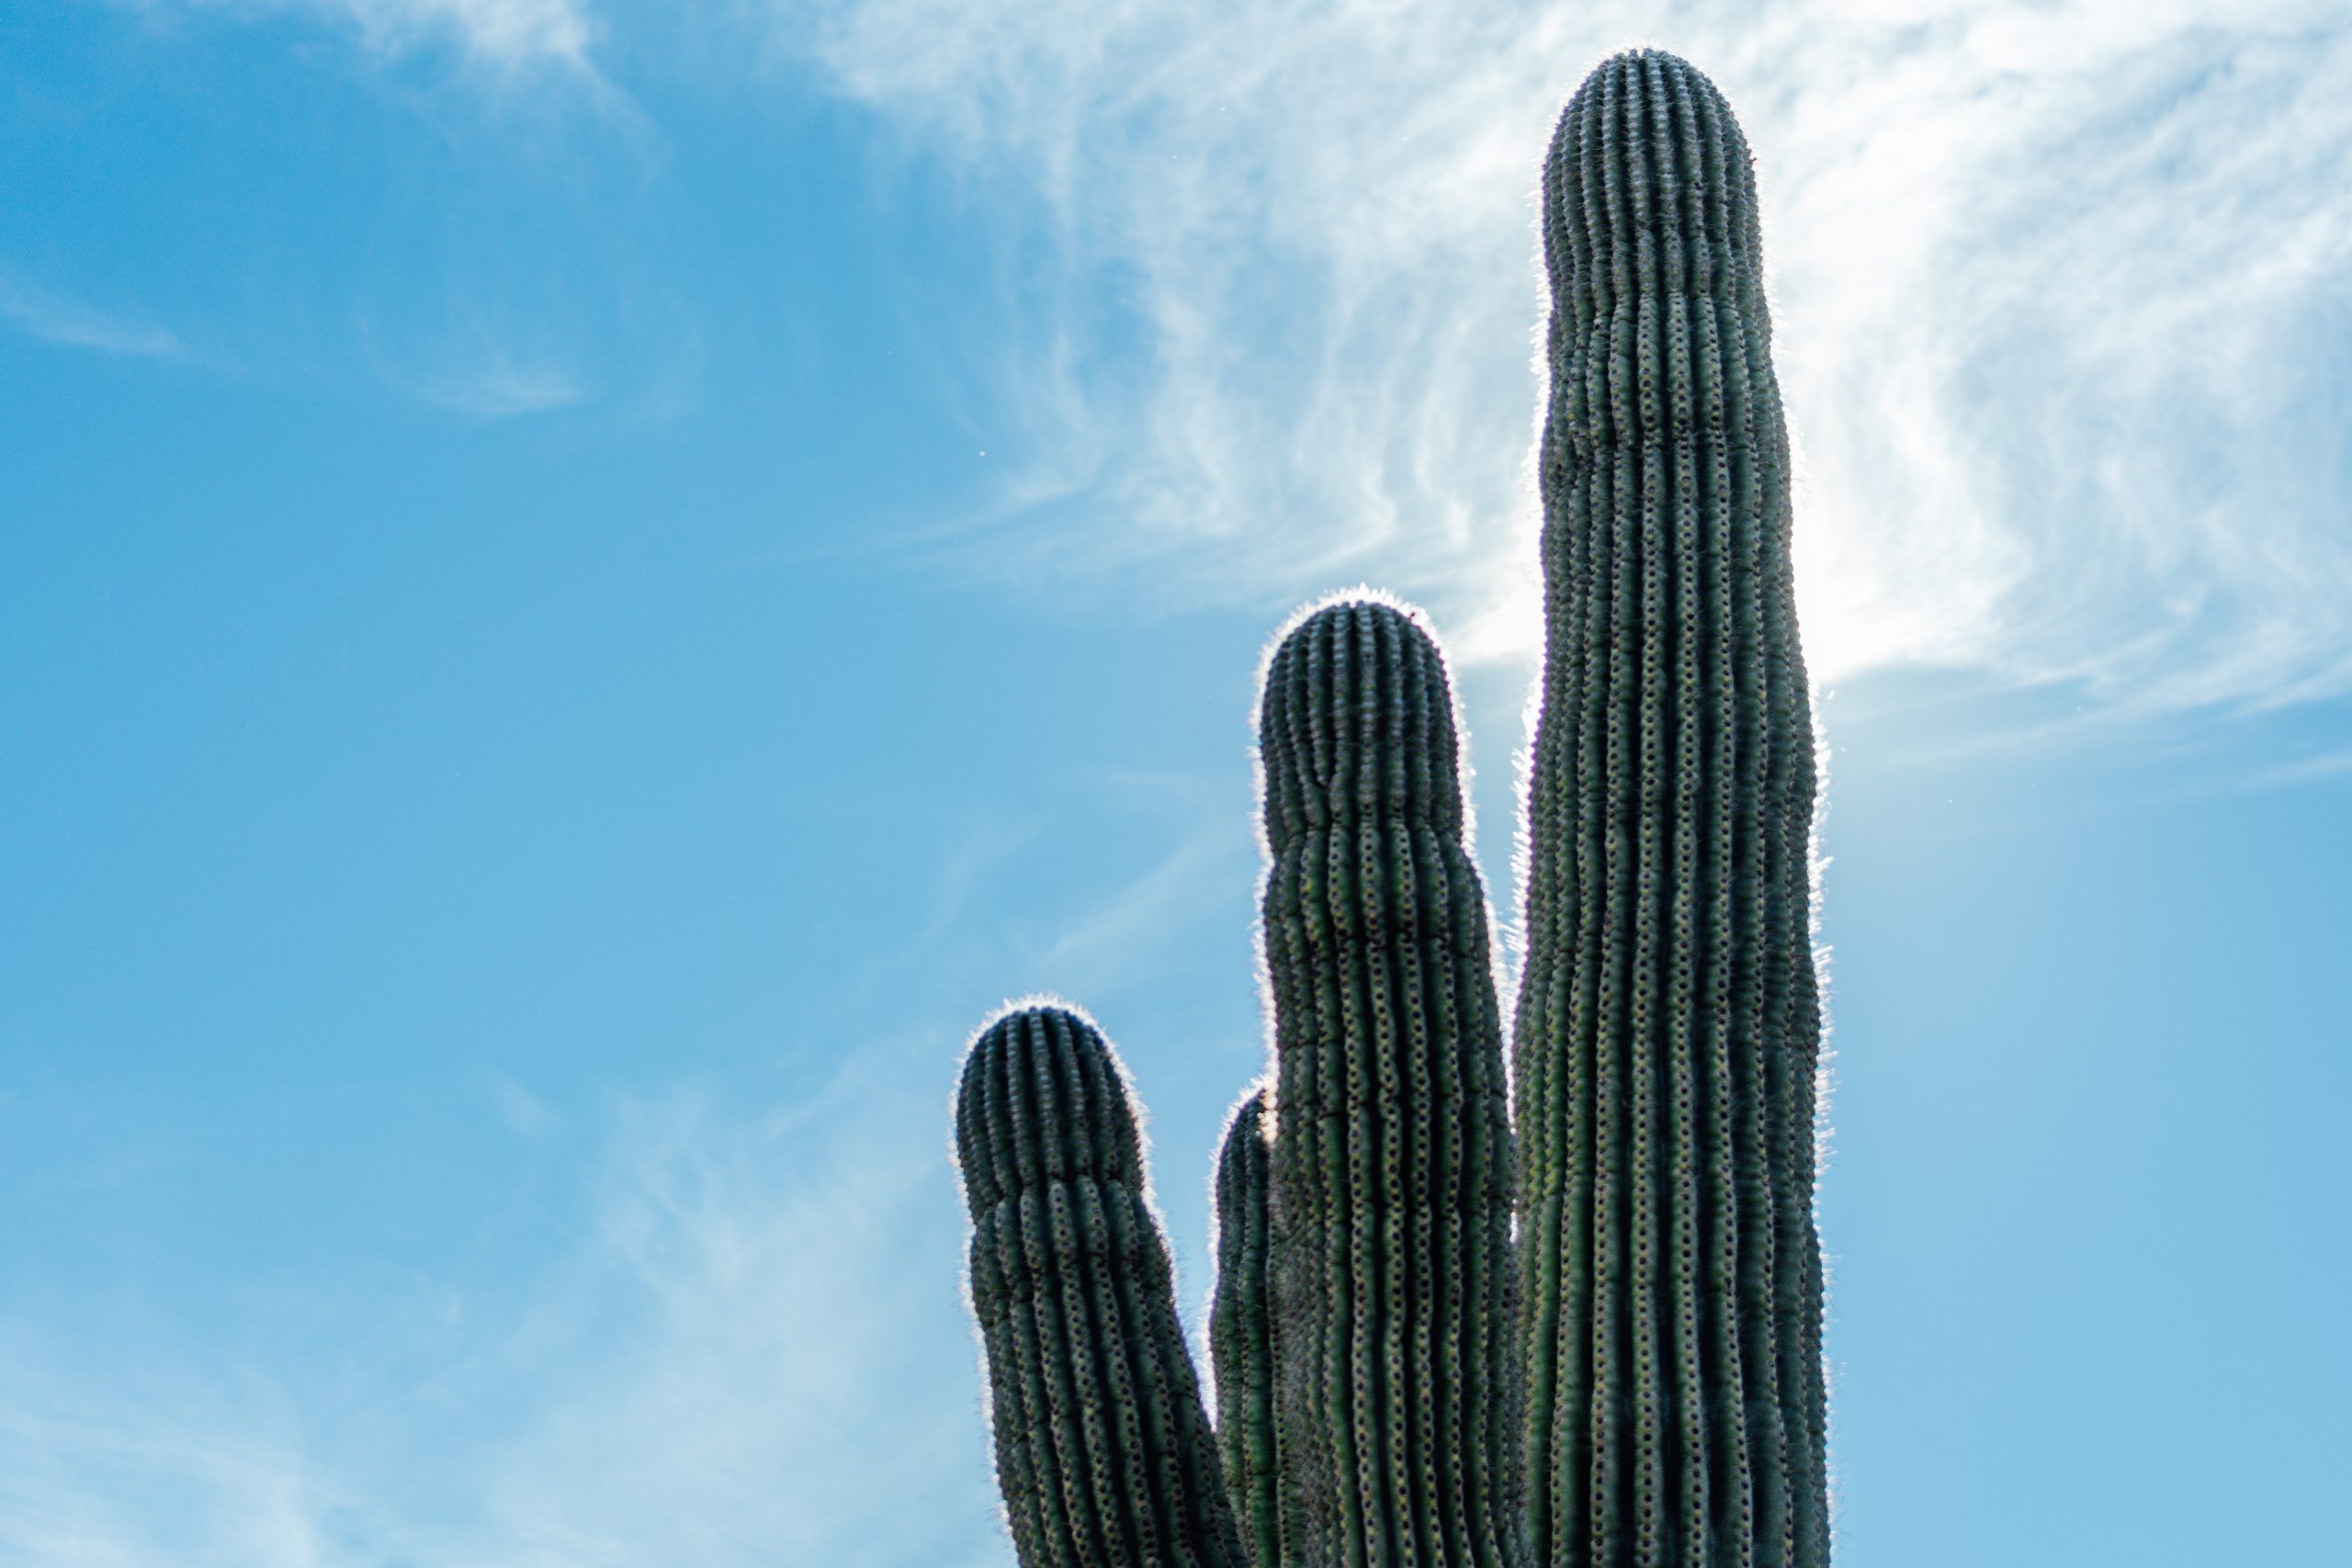 Photo of a saguaro cactus